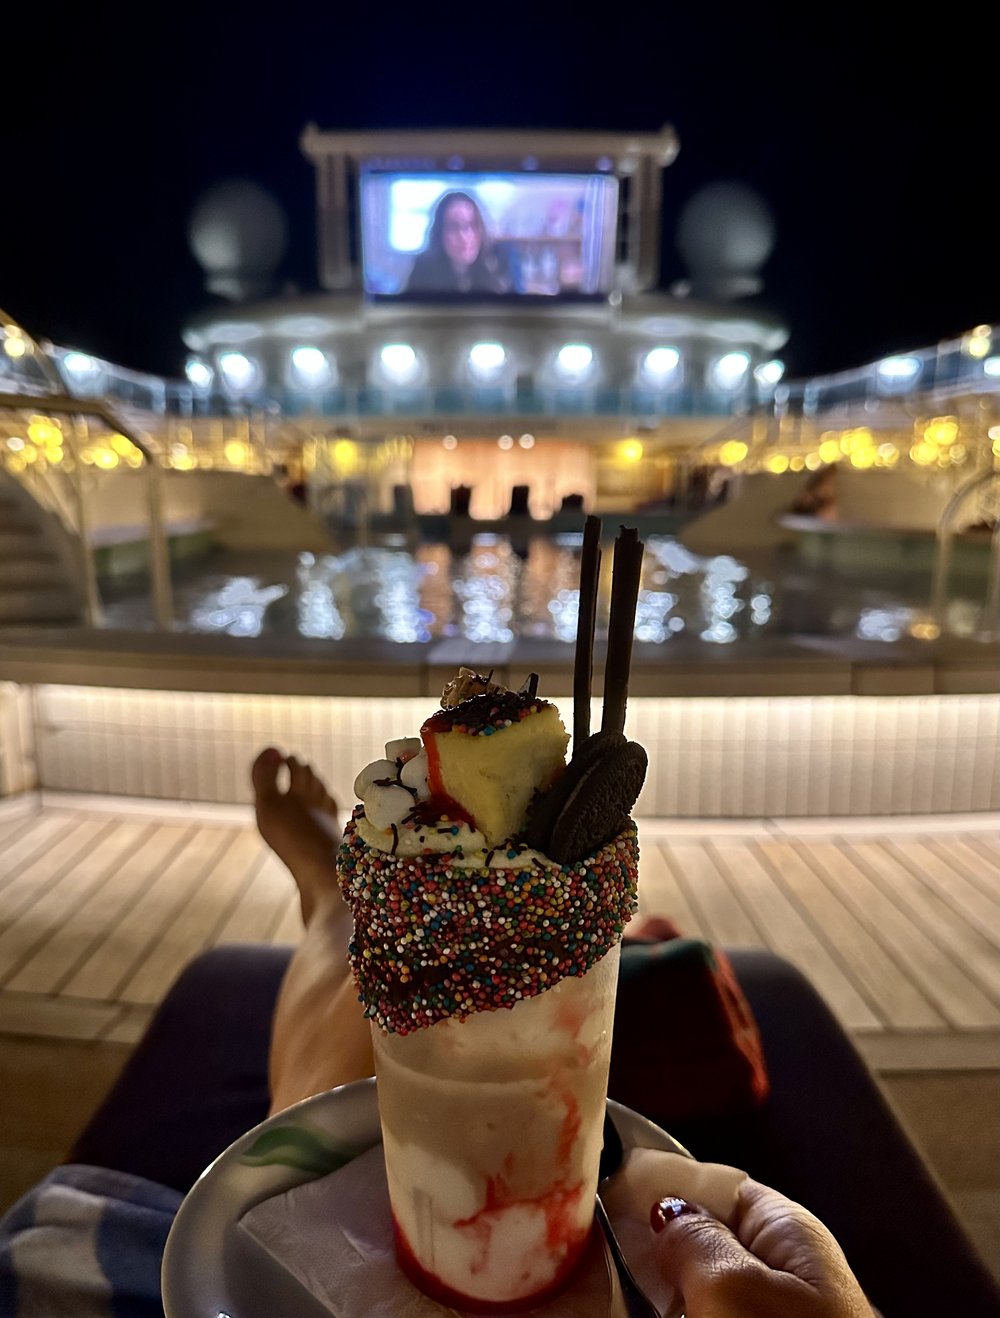 Ice cream and movies